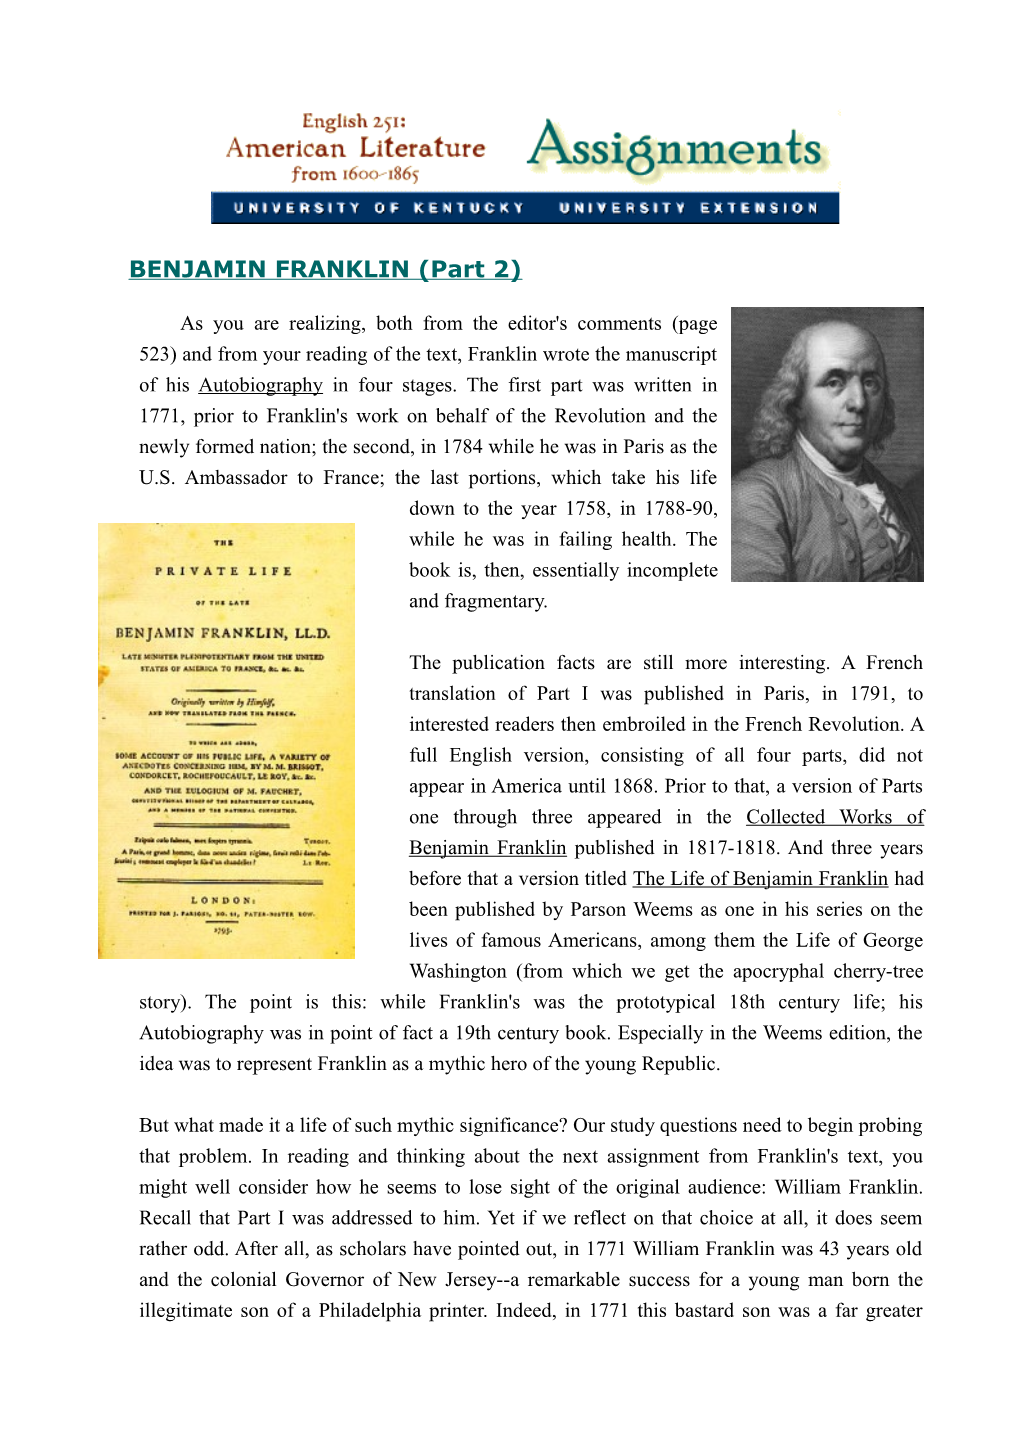 Benjamin Franklin's Autobiography Part 2